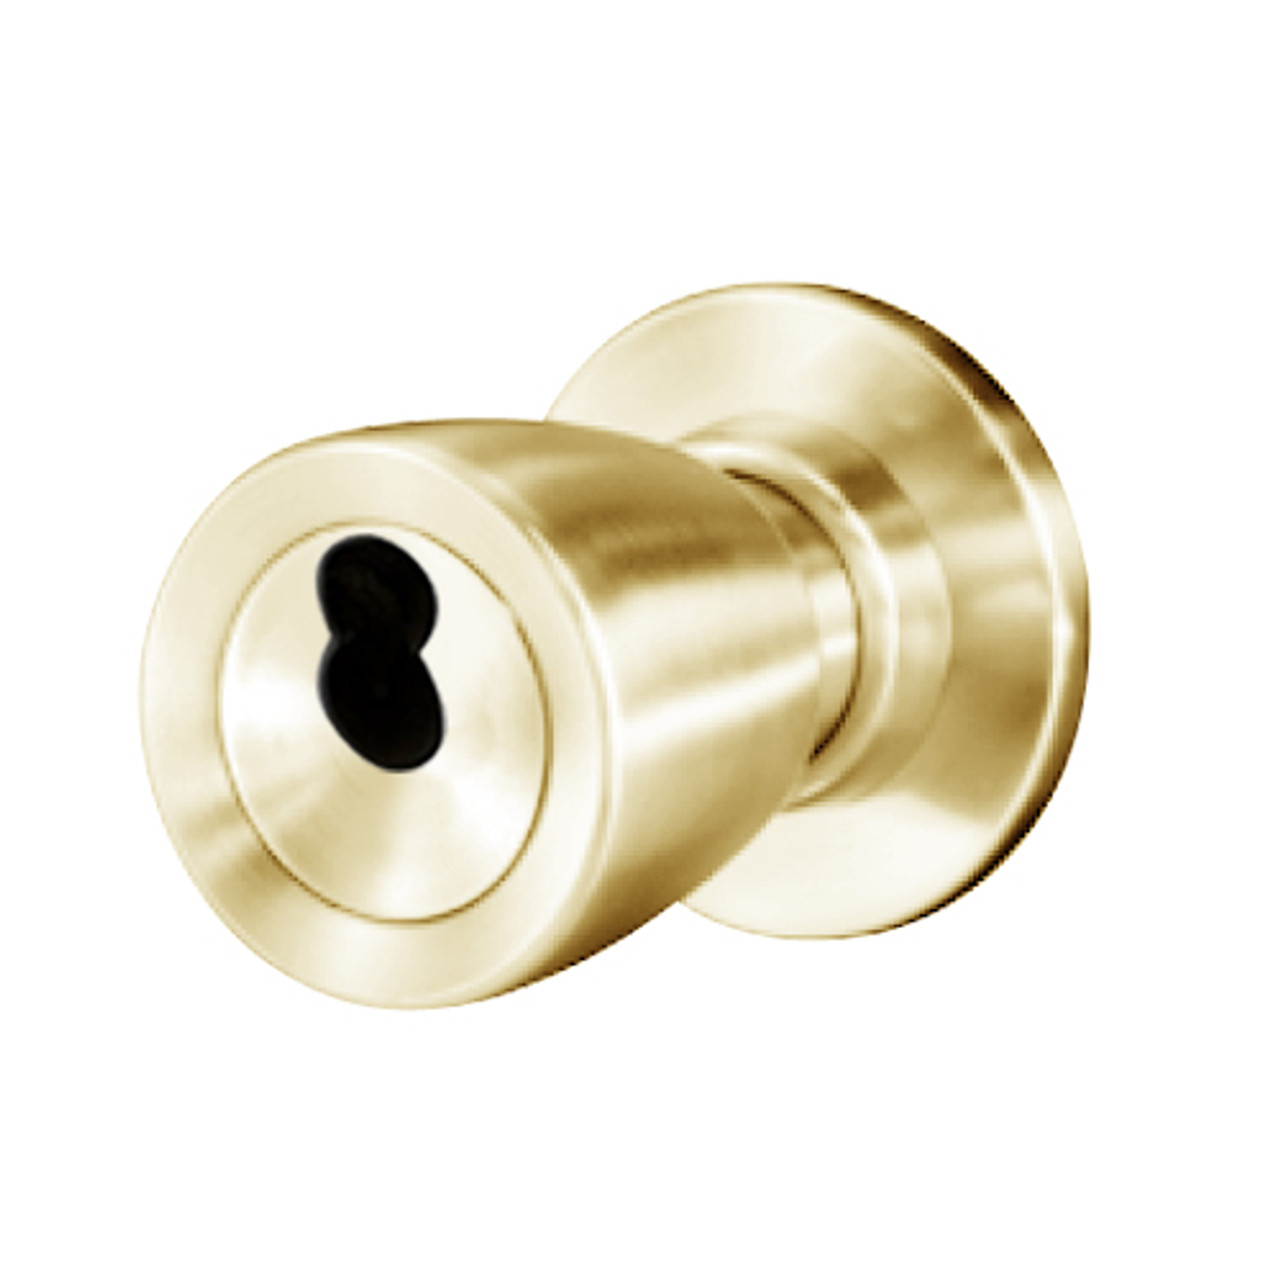 8K37B6CS3606 Best 8K Series Office Heavy Duty Cylindrical Knob Locks with Tulip Style in Satin Brass